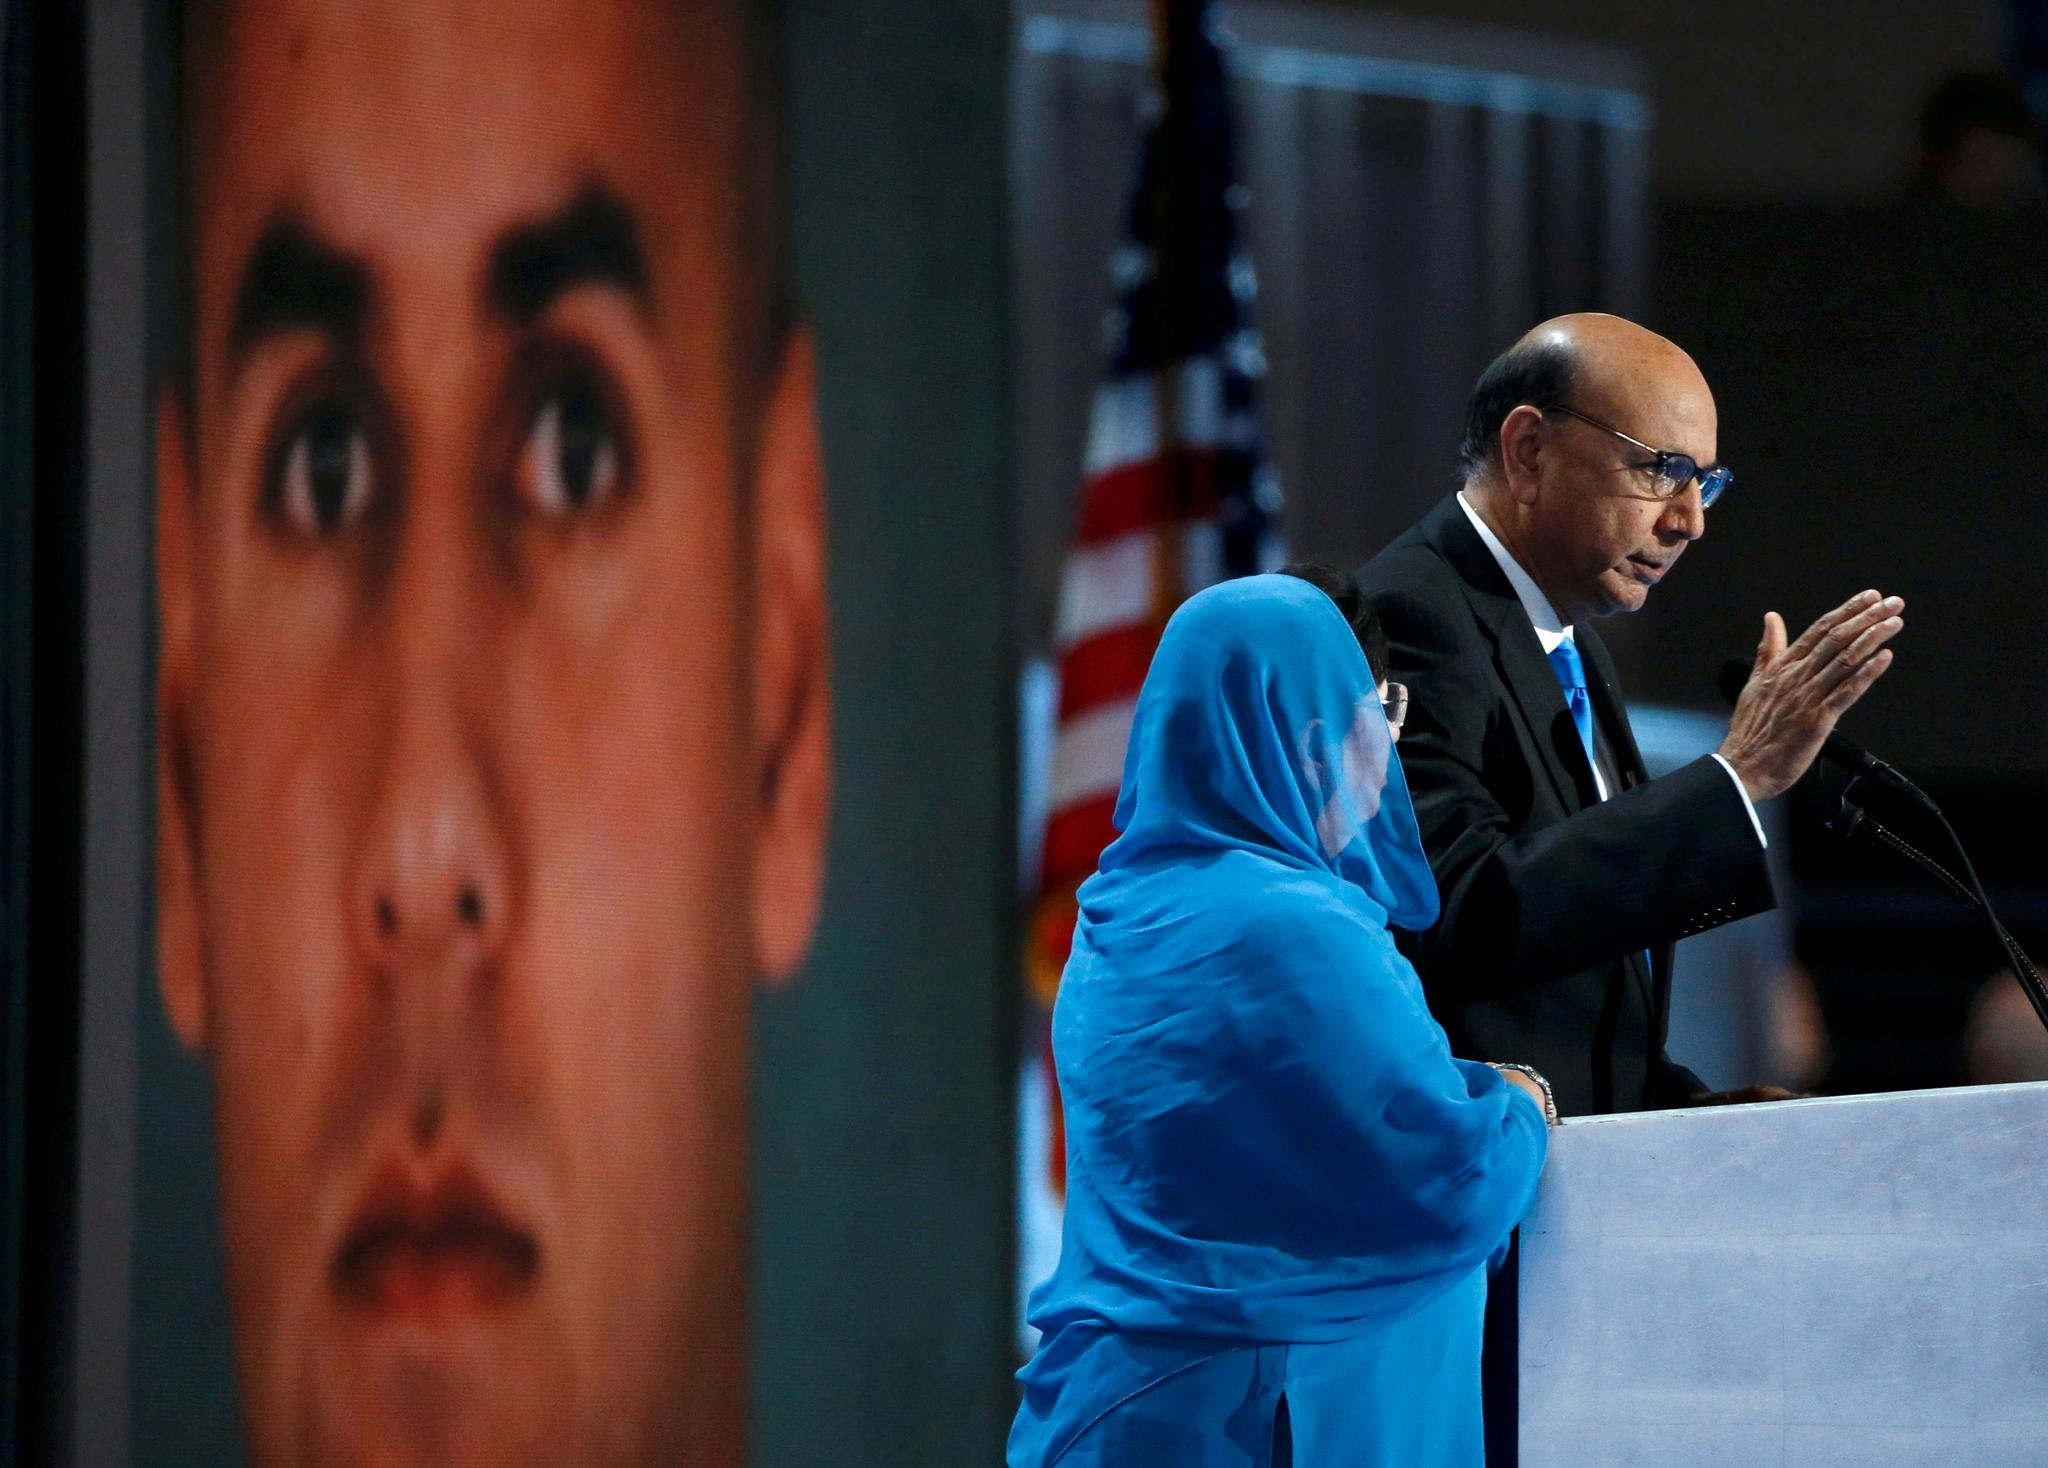 Muslimske Khizr Khan og hans kone Ghazala Khan mistet sin sønn, kaptein Humayun Khan (27) i USAs hær, da han falt i strid i Irak i 2004. Torsdag stod de på talerstolen under landsmøtet til Det demokratiske partiet.